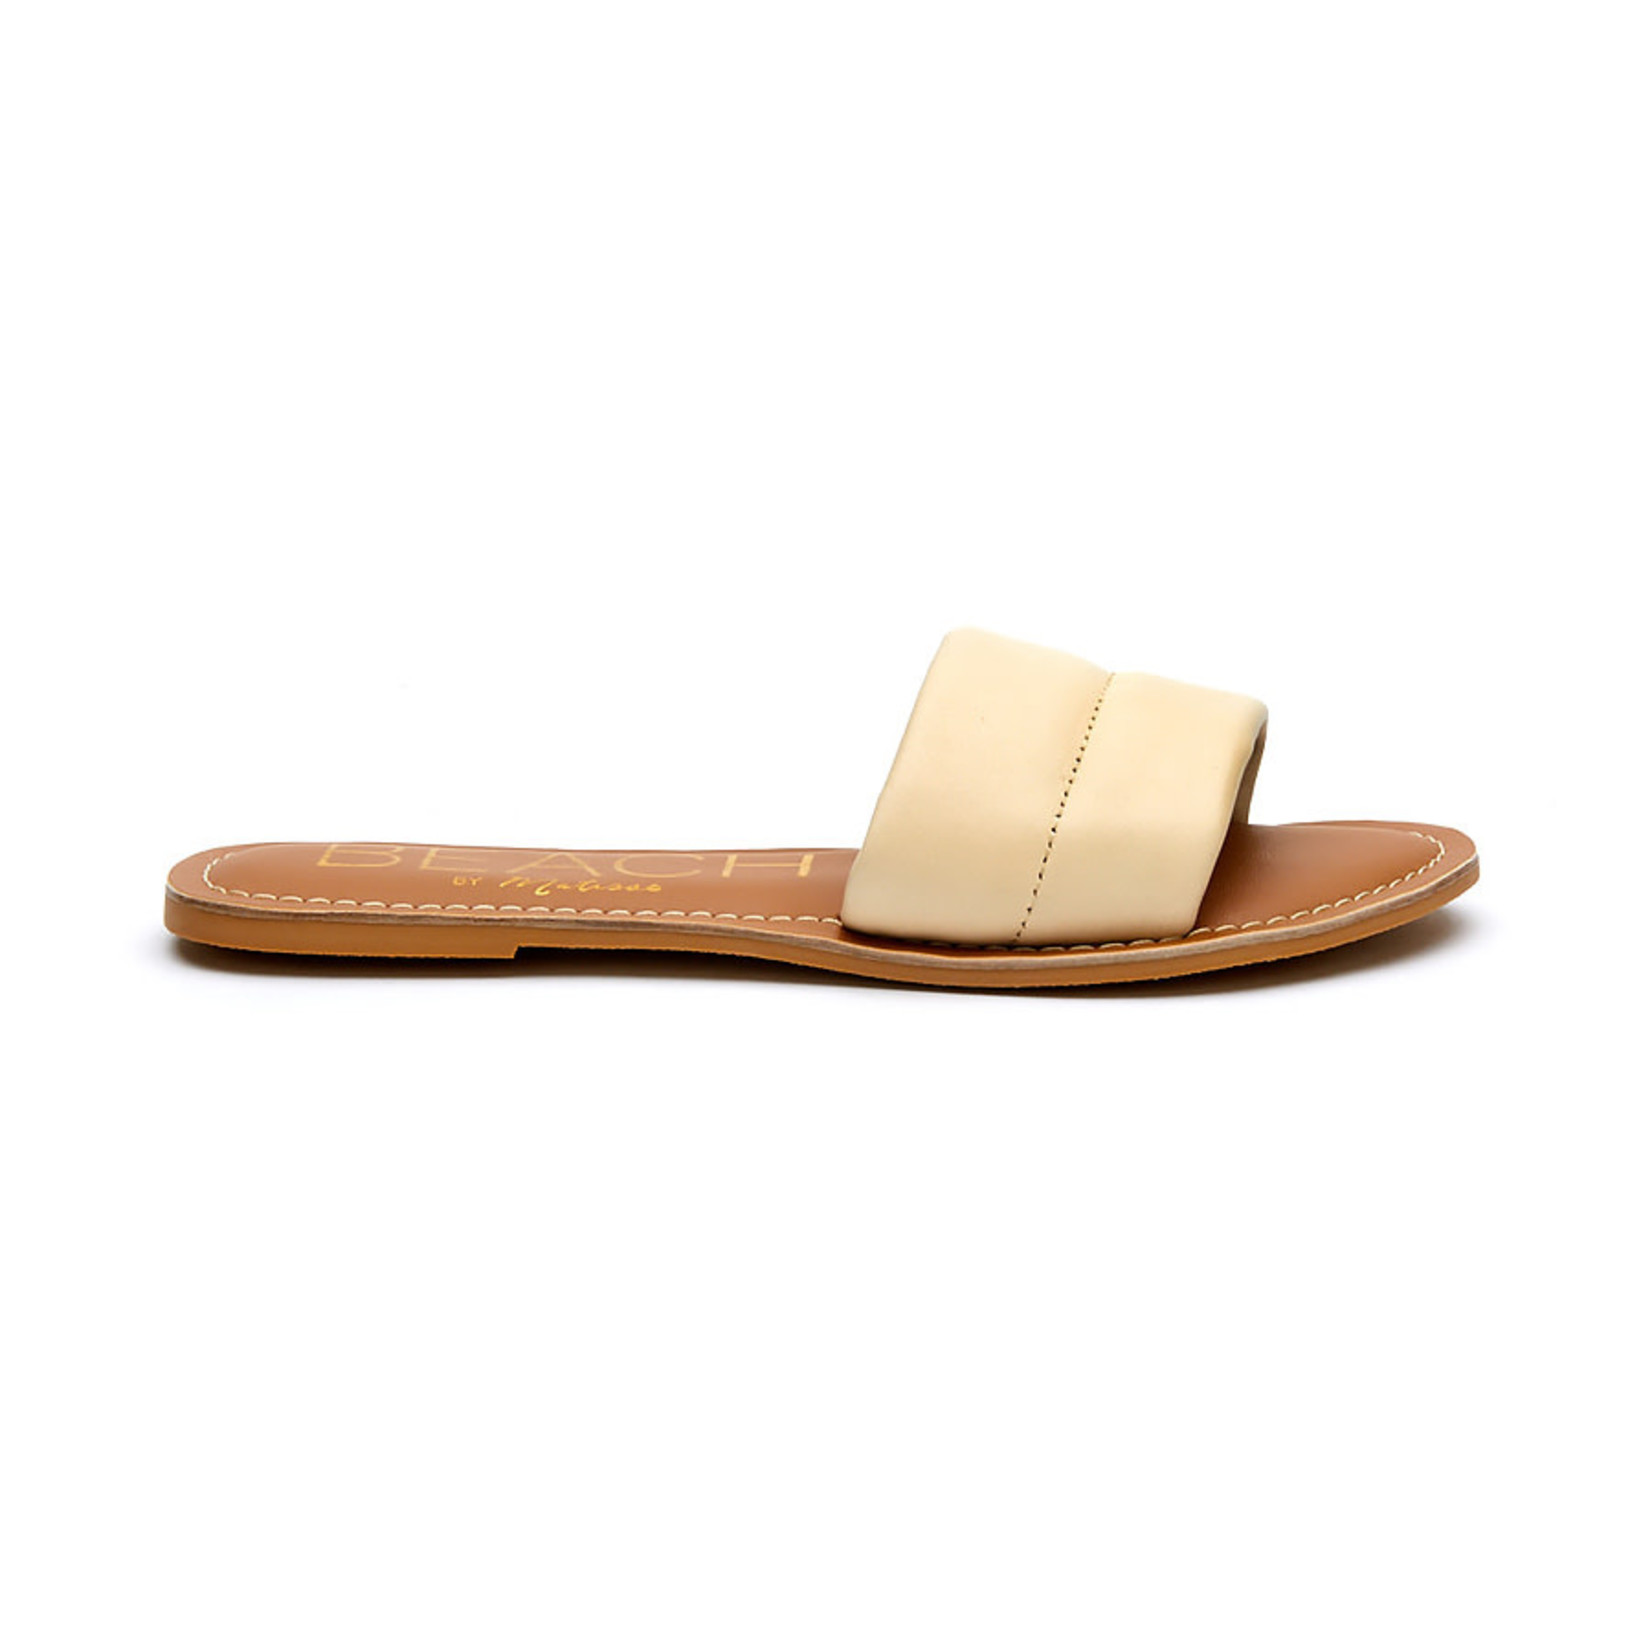 Matisse Daiquiri Slide Sandal